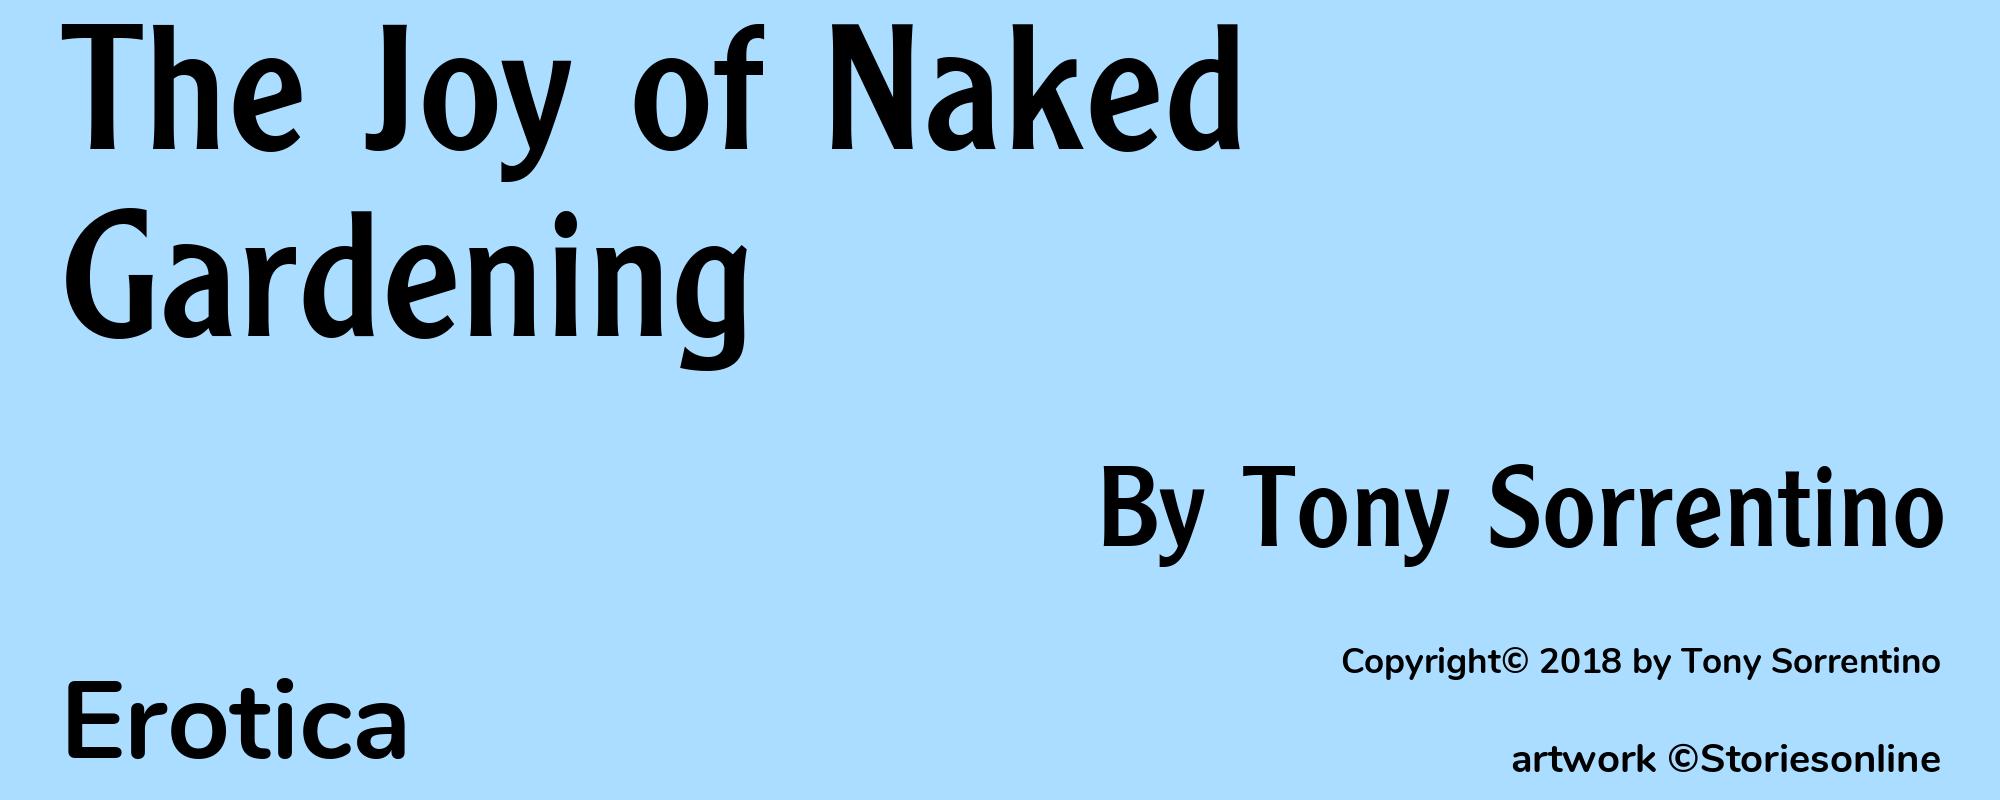 The Joy of Naked Gardening - Cover